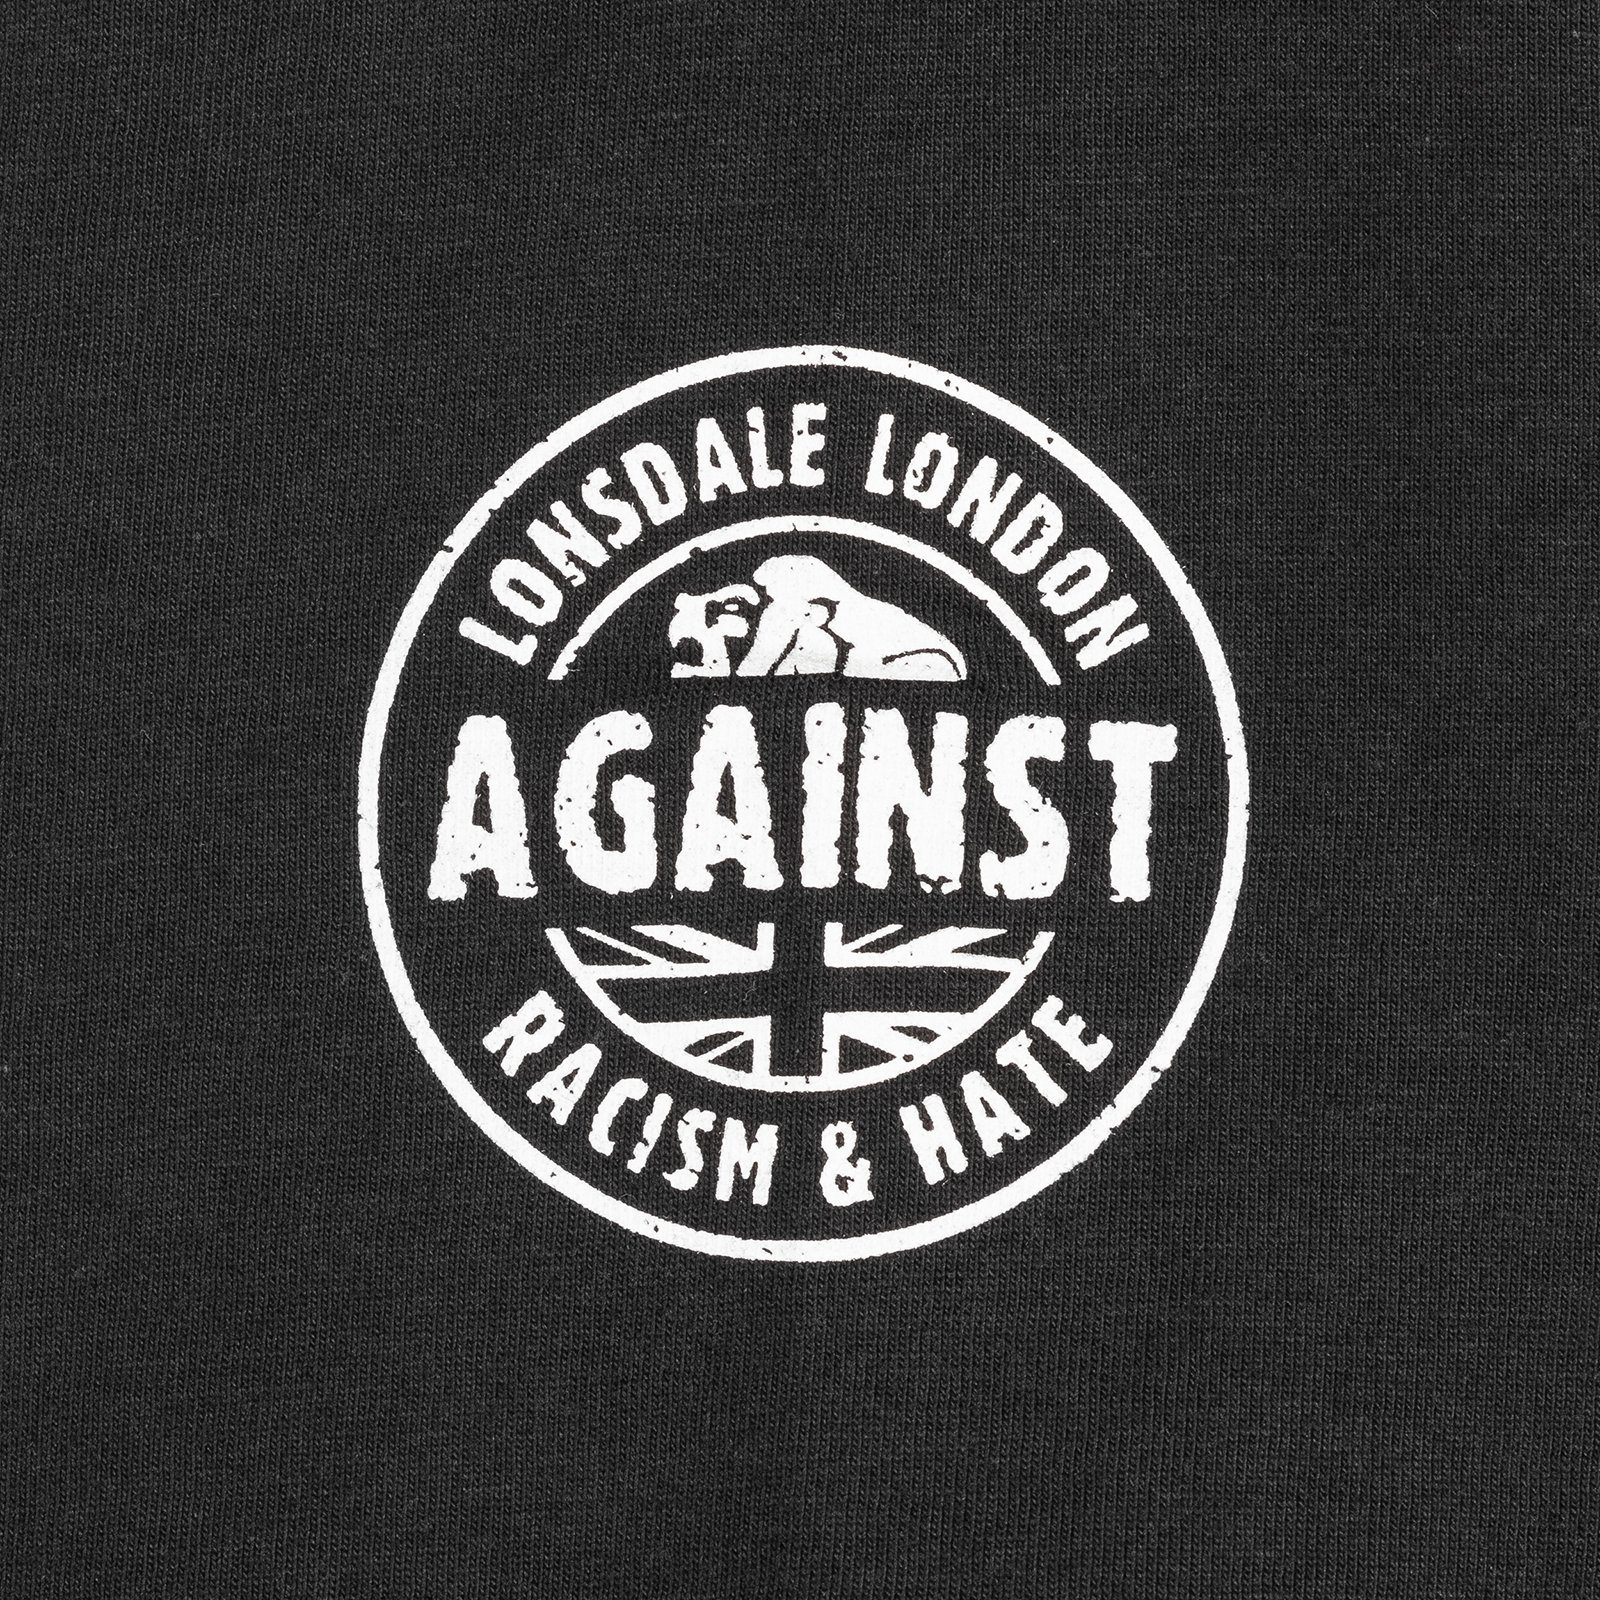 Lonsdale Lonsdale T-Shirt Warlingham Herren Adult T-Shirt